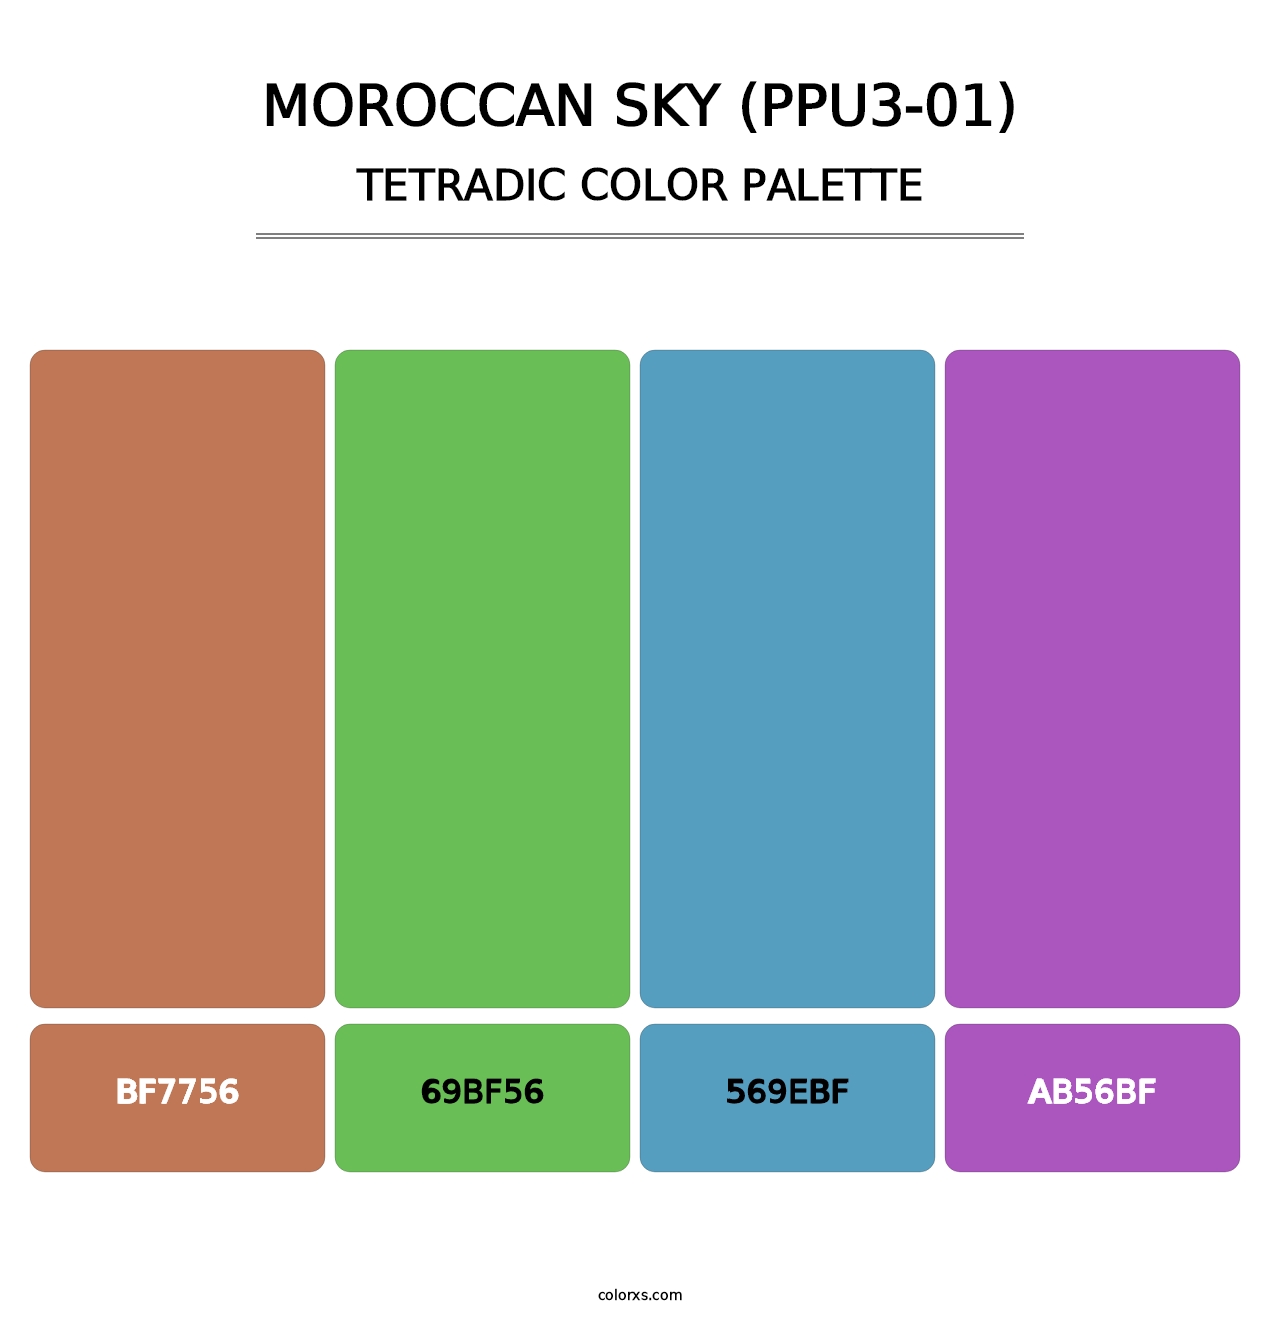 Moroccan Sky (PPU3-01) - Tetradic Color Palette